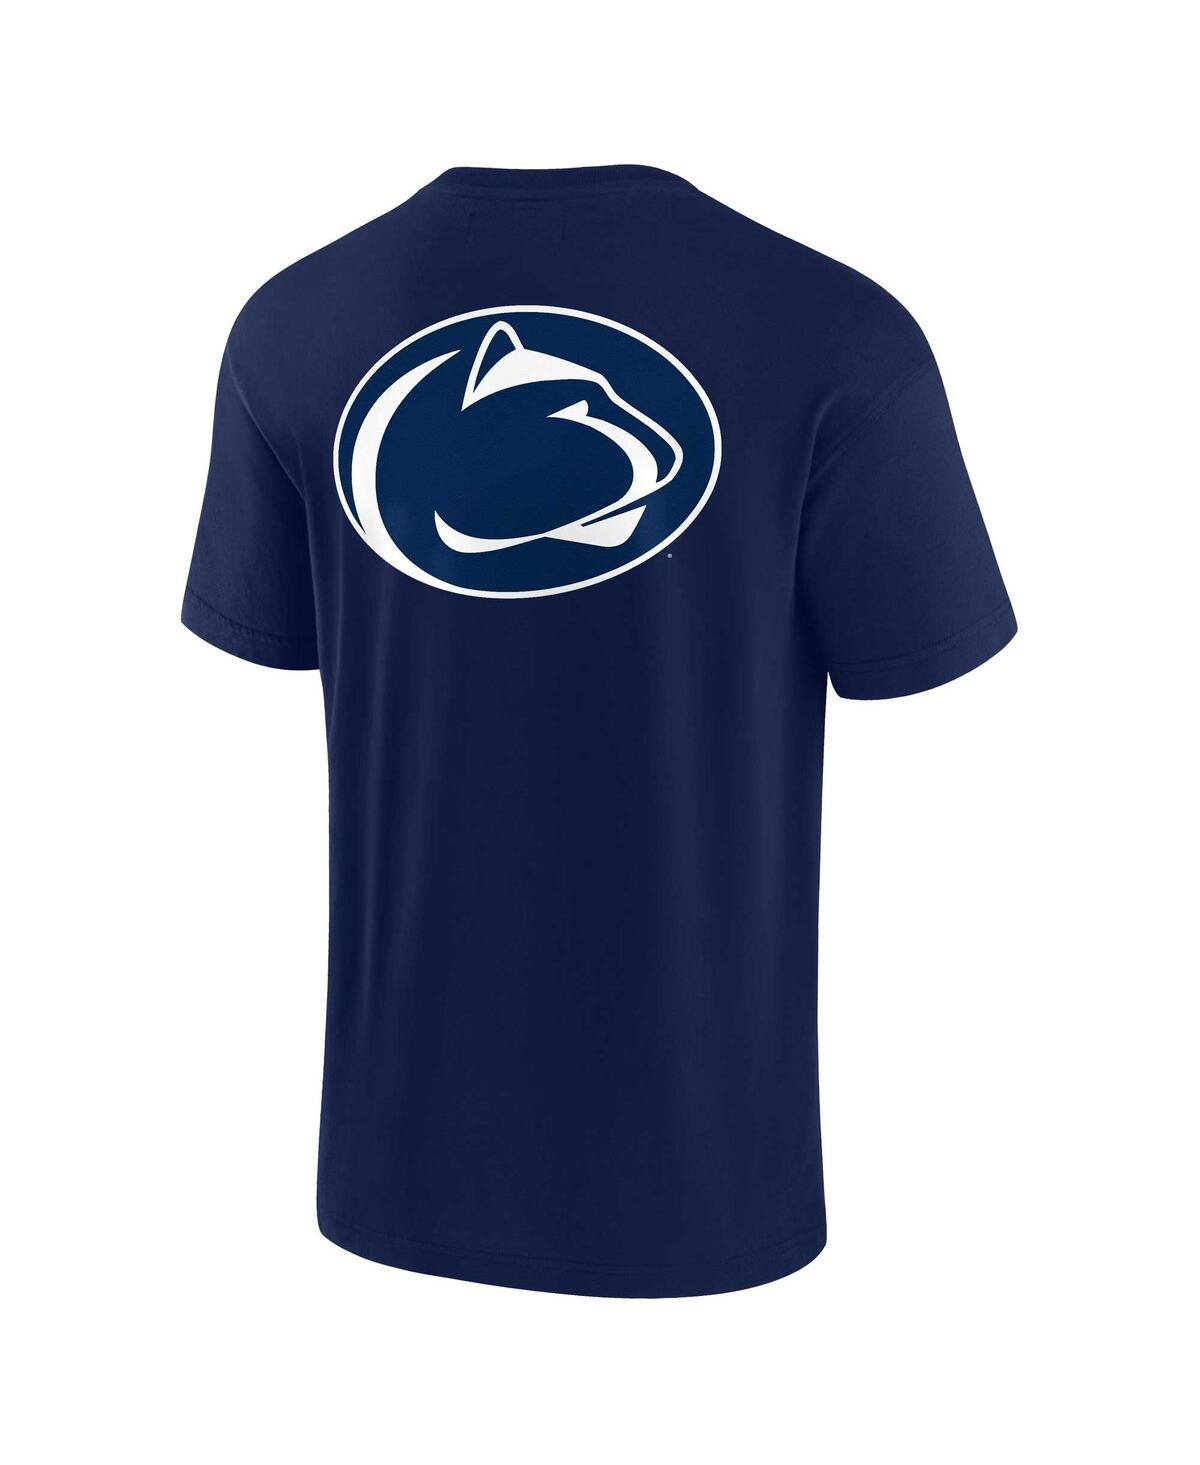 Shop Fanatics Signature Men's And Women's  Navy Penn State Nittany Lions Super Soft Short Sleeve T-shirt